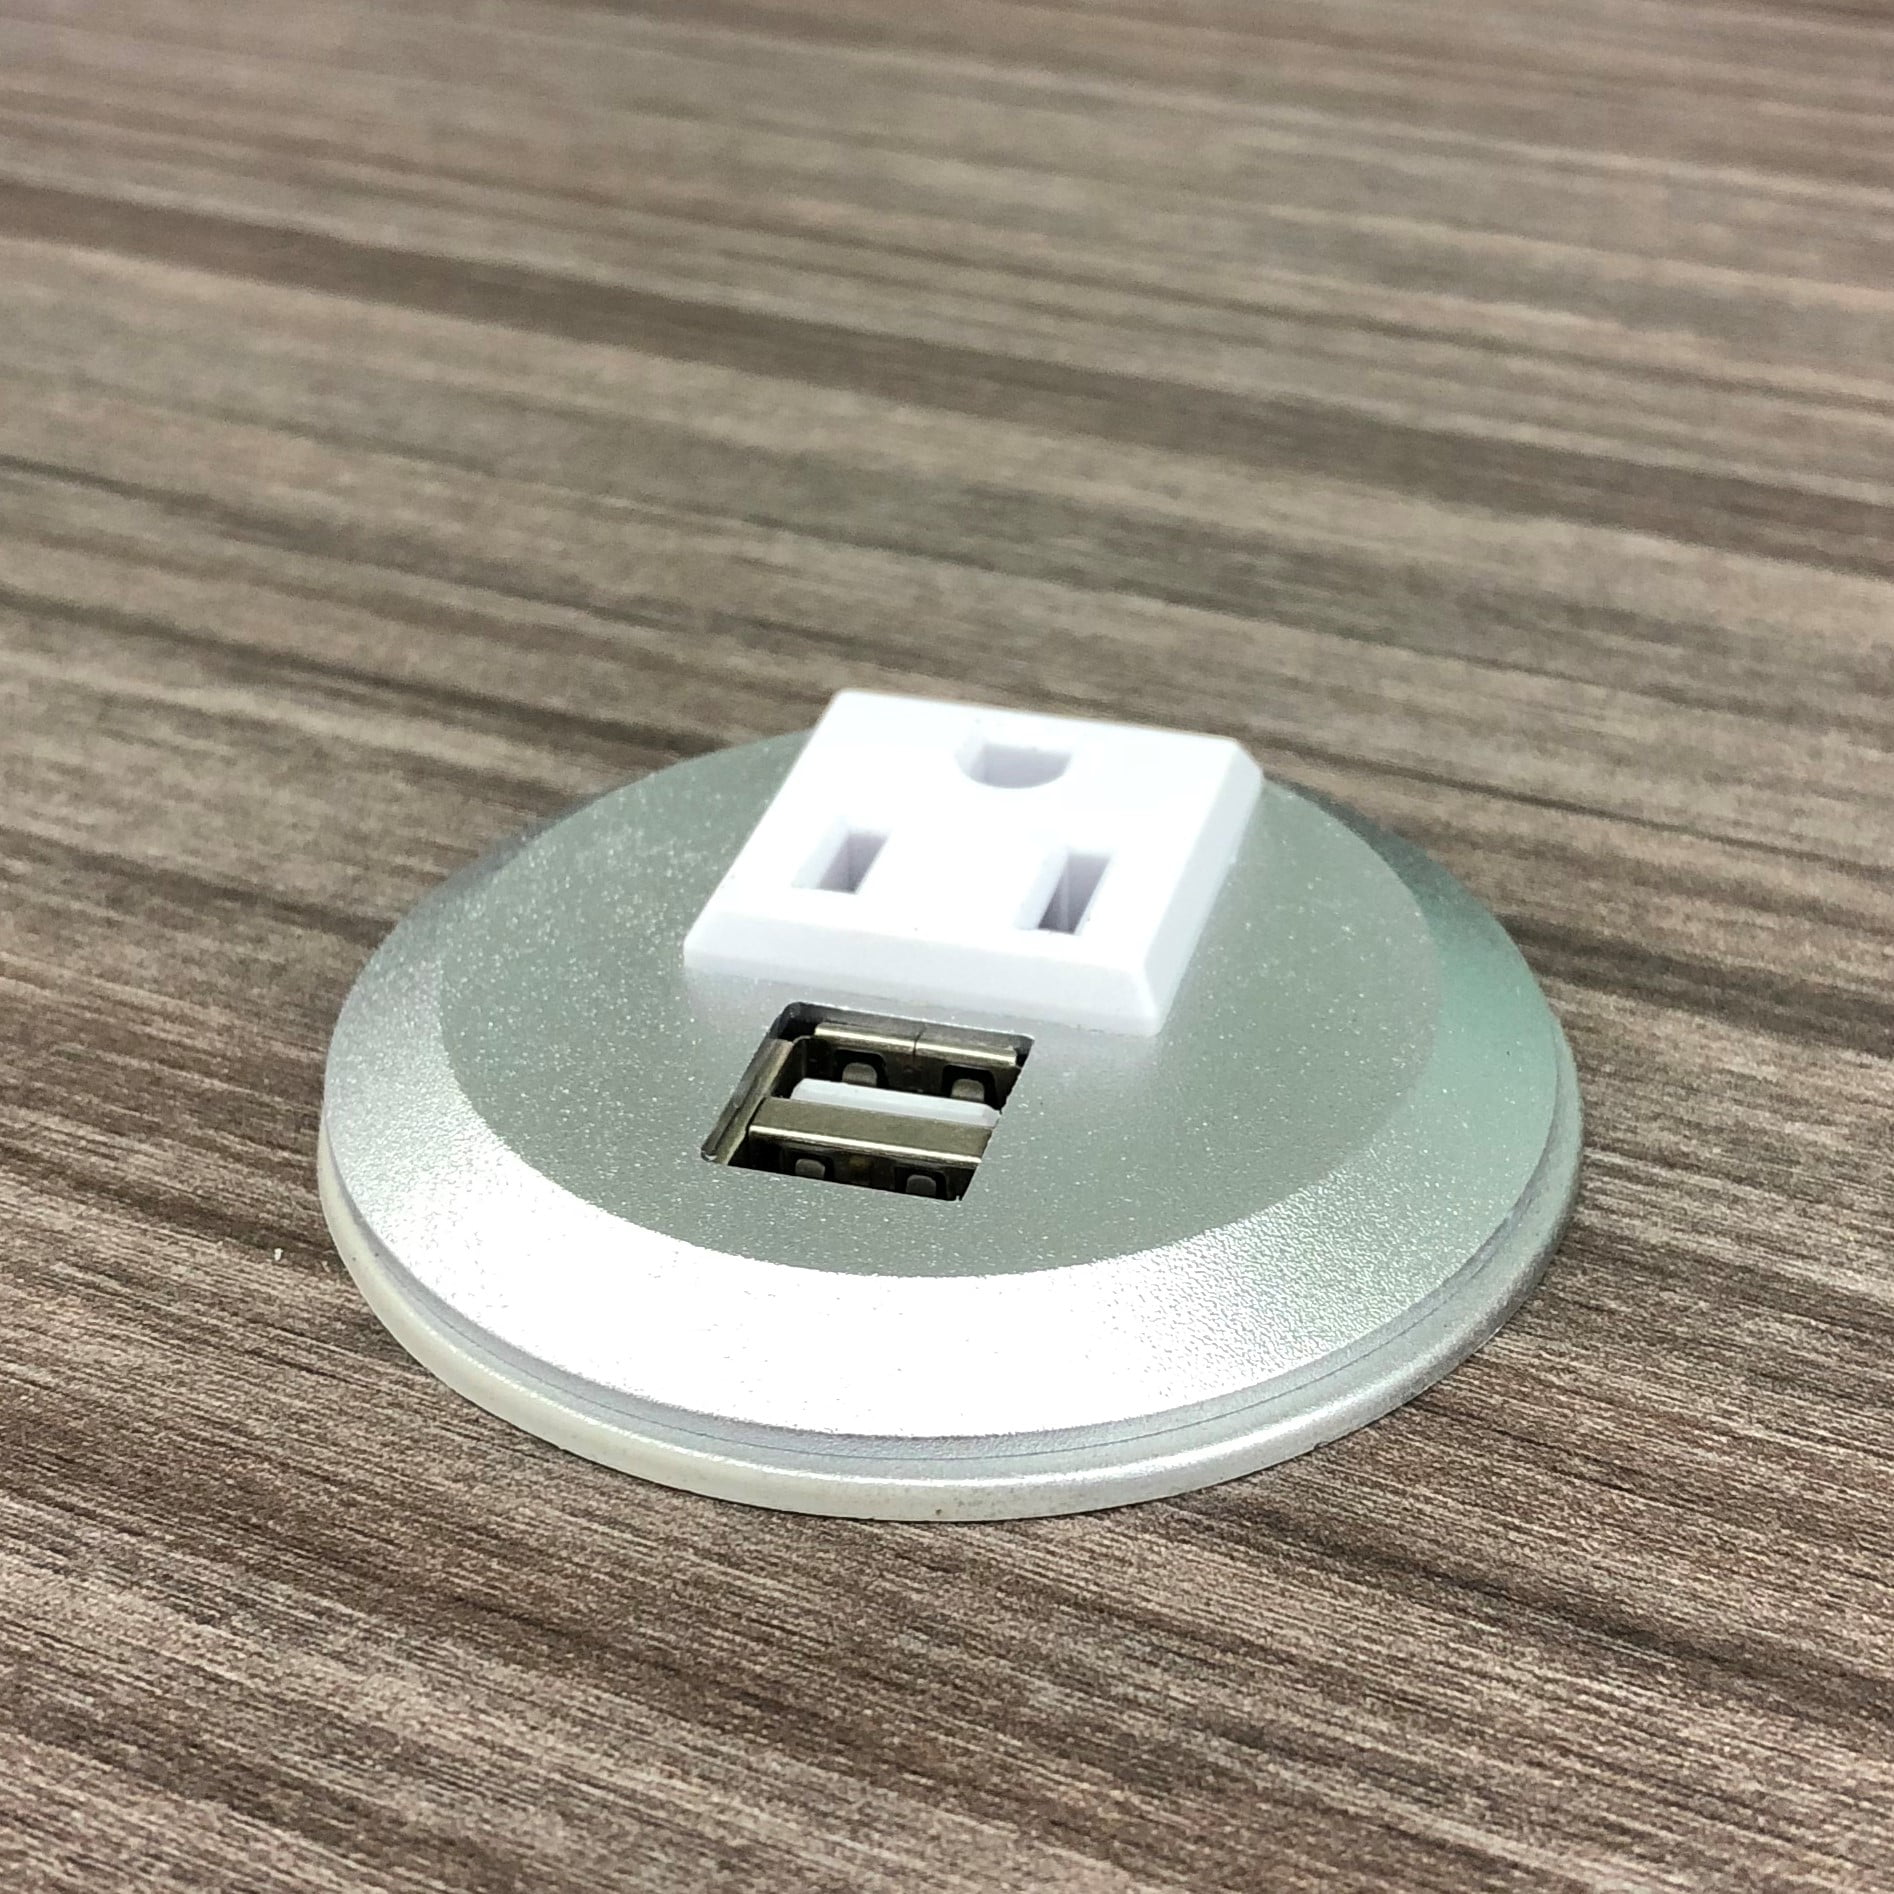 Pwr-Plug Power Outlet USB Charger Port Fits 2"-2.5" Grommet Hole Office Desk Top 